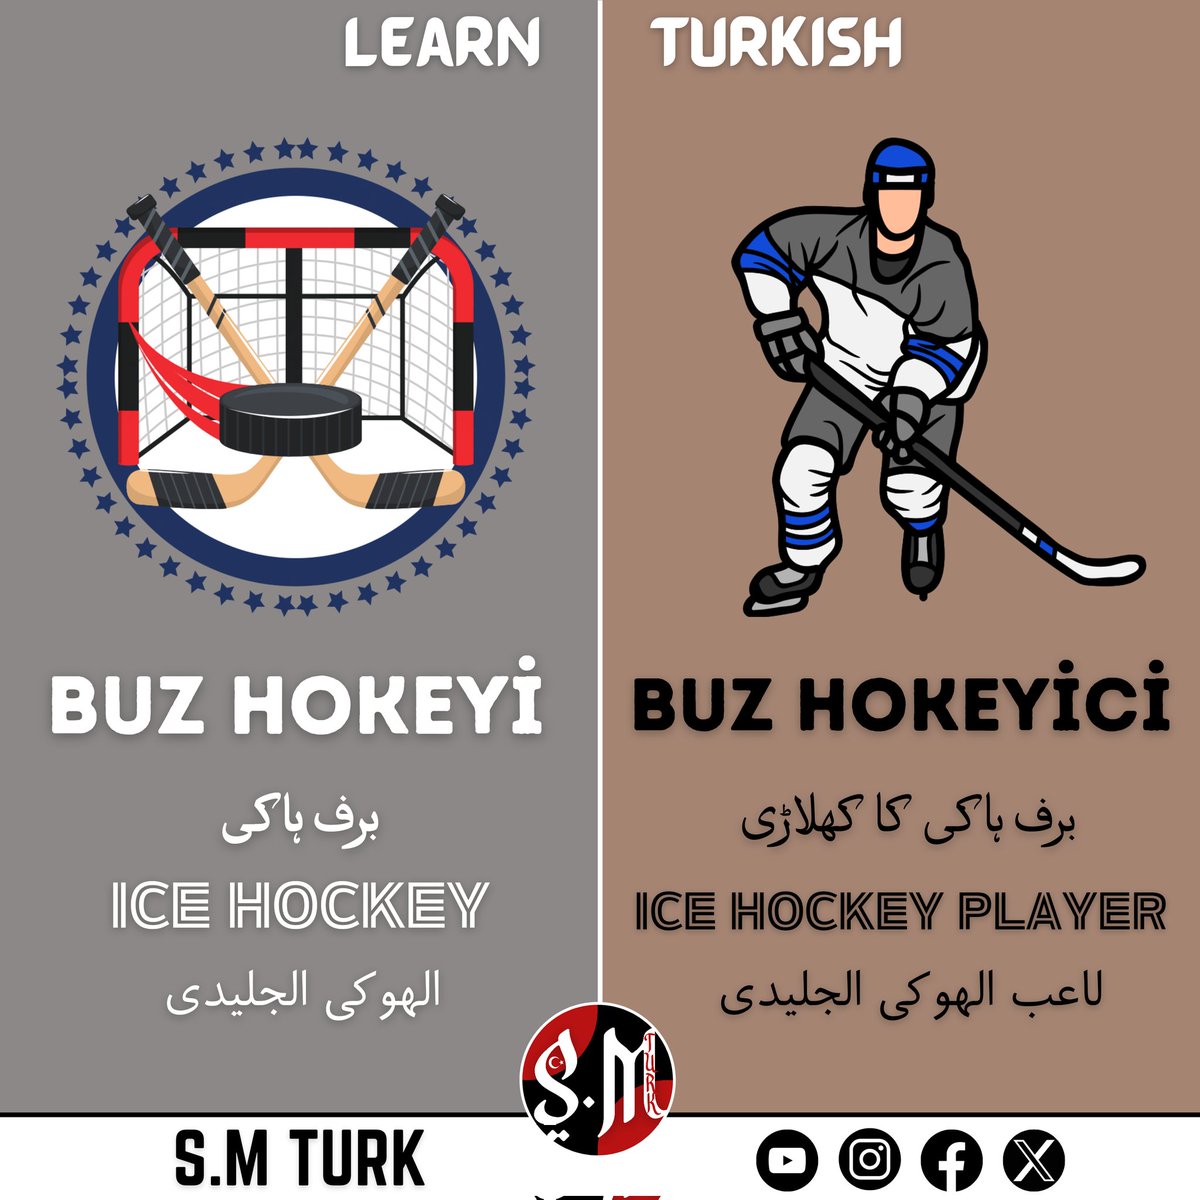 Learn Turkish with S.M TURK 
.
.
.
.
#smturk #sufyanmustafa #cricket #footballfans #cricketfever #arabiclanguage #hockeylife #hockeyseason #hockeyplayer #hockeyislife #hockeytraining #hockeyfamily #icehockey #icehockeyuk #icehockeyplayers #icehockeygoalie #icehockeytraining